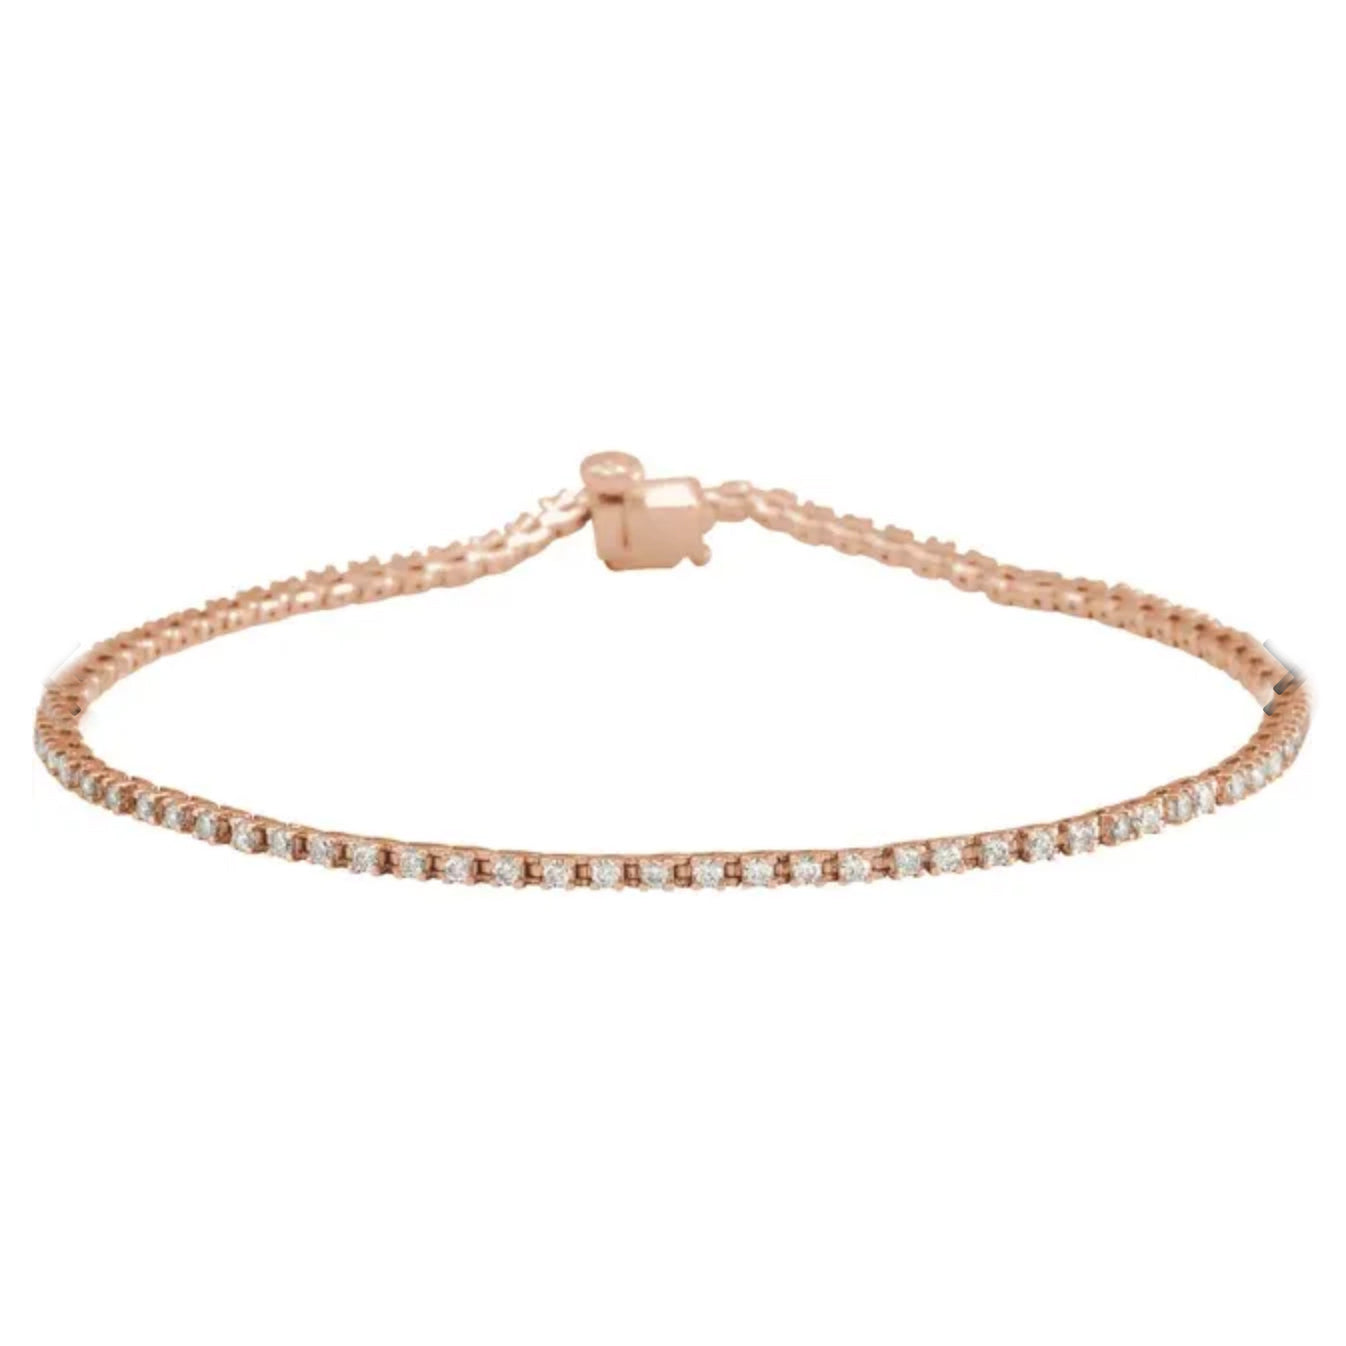 1 carat tennis bracelet rose gold